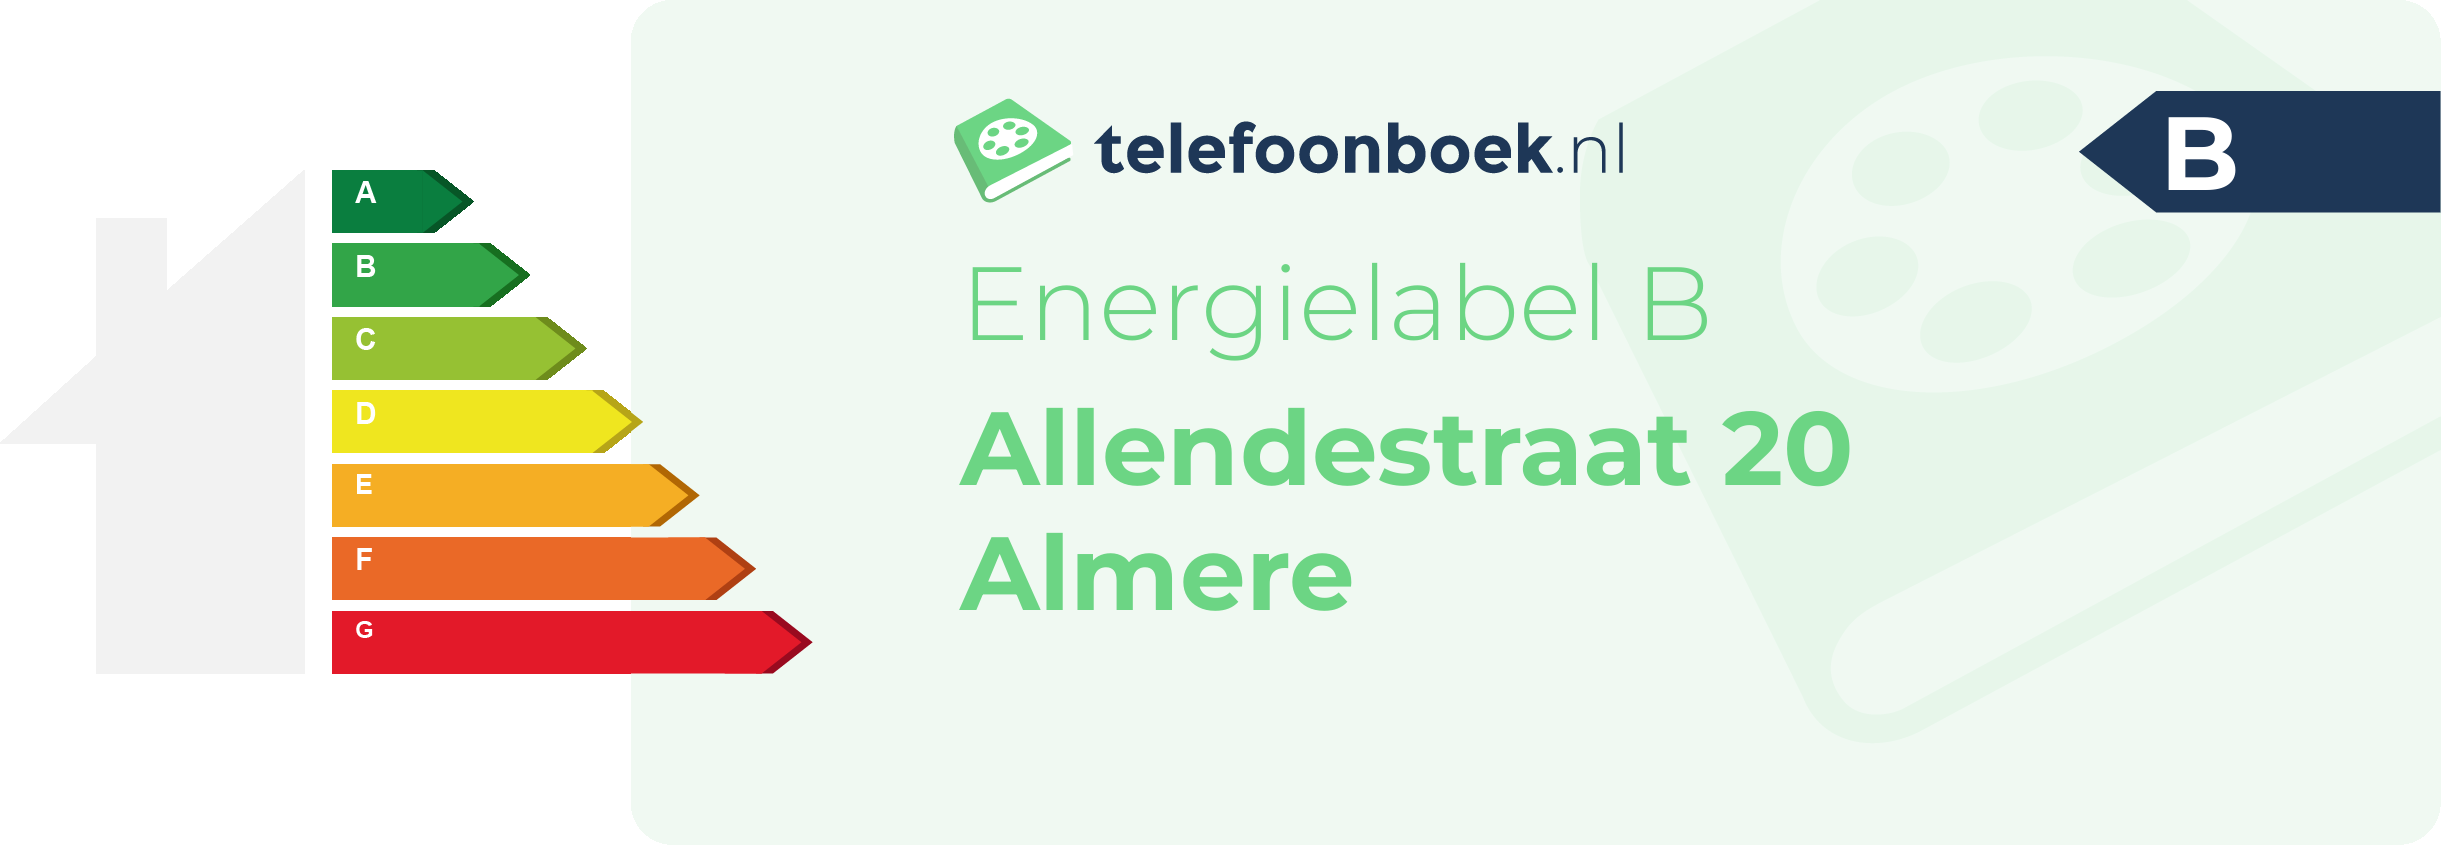 Energielabel Allendestraat 20 Almere